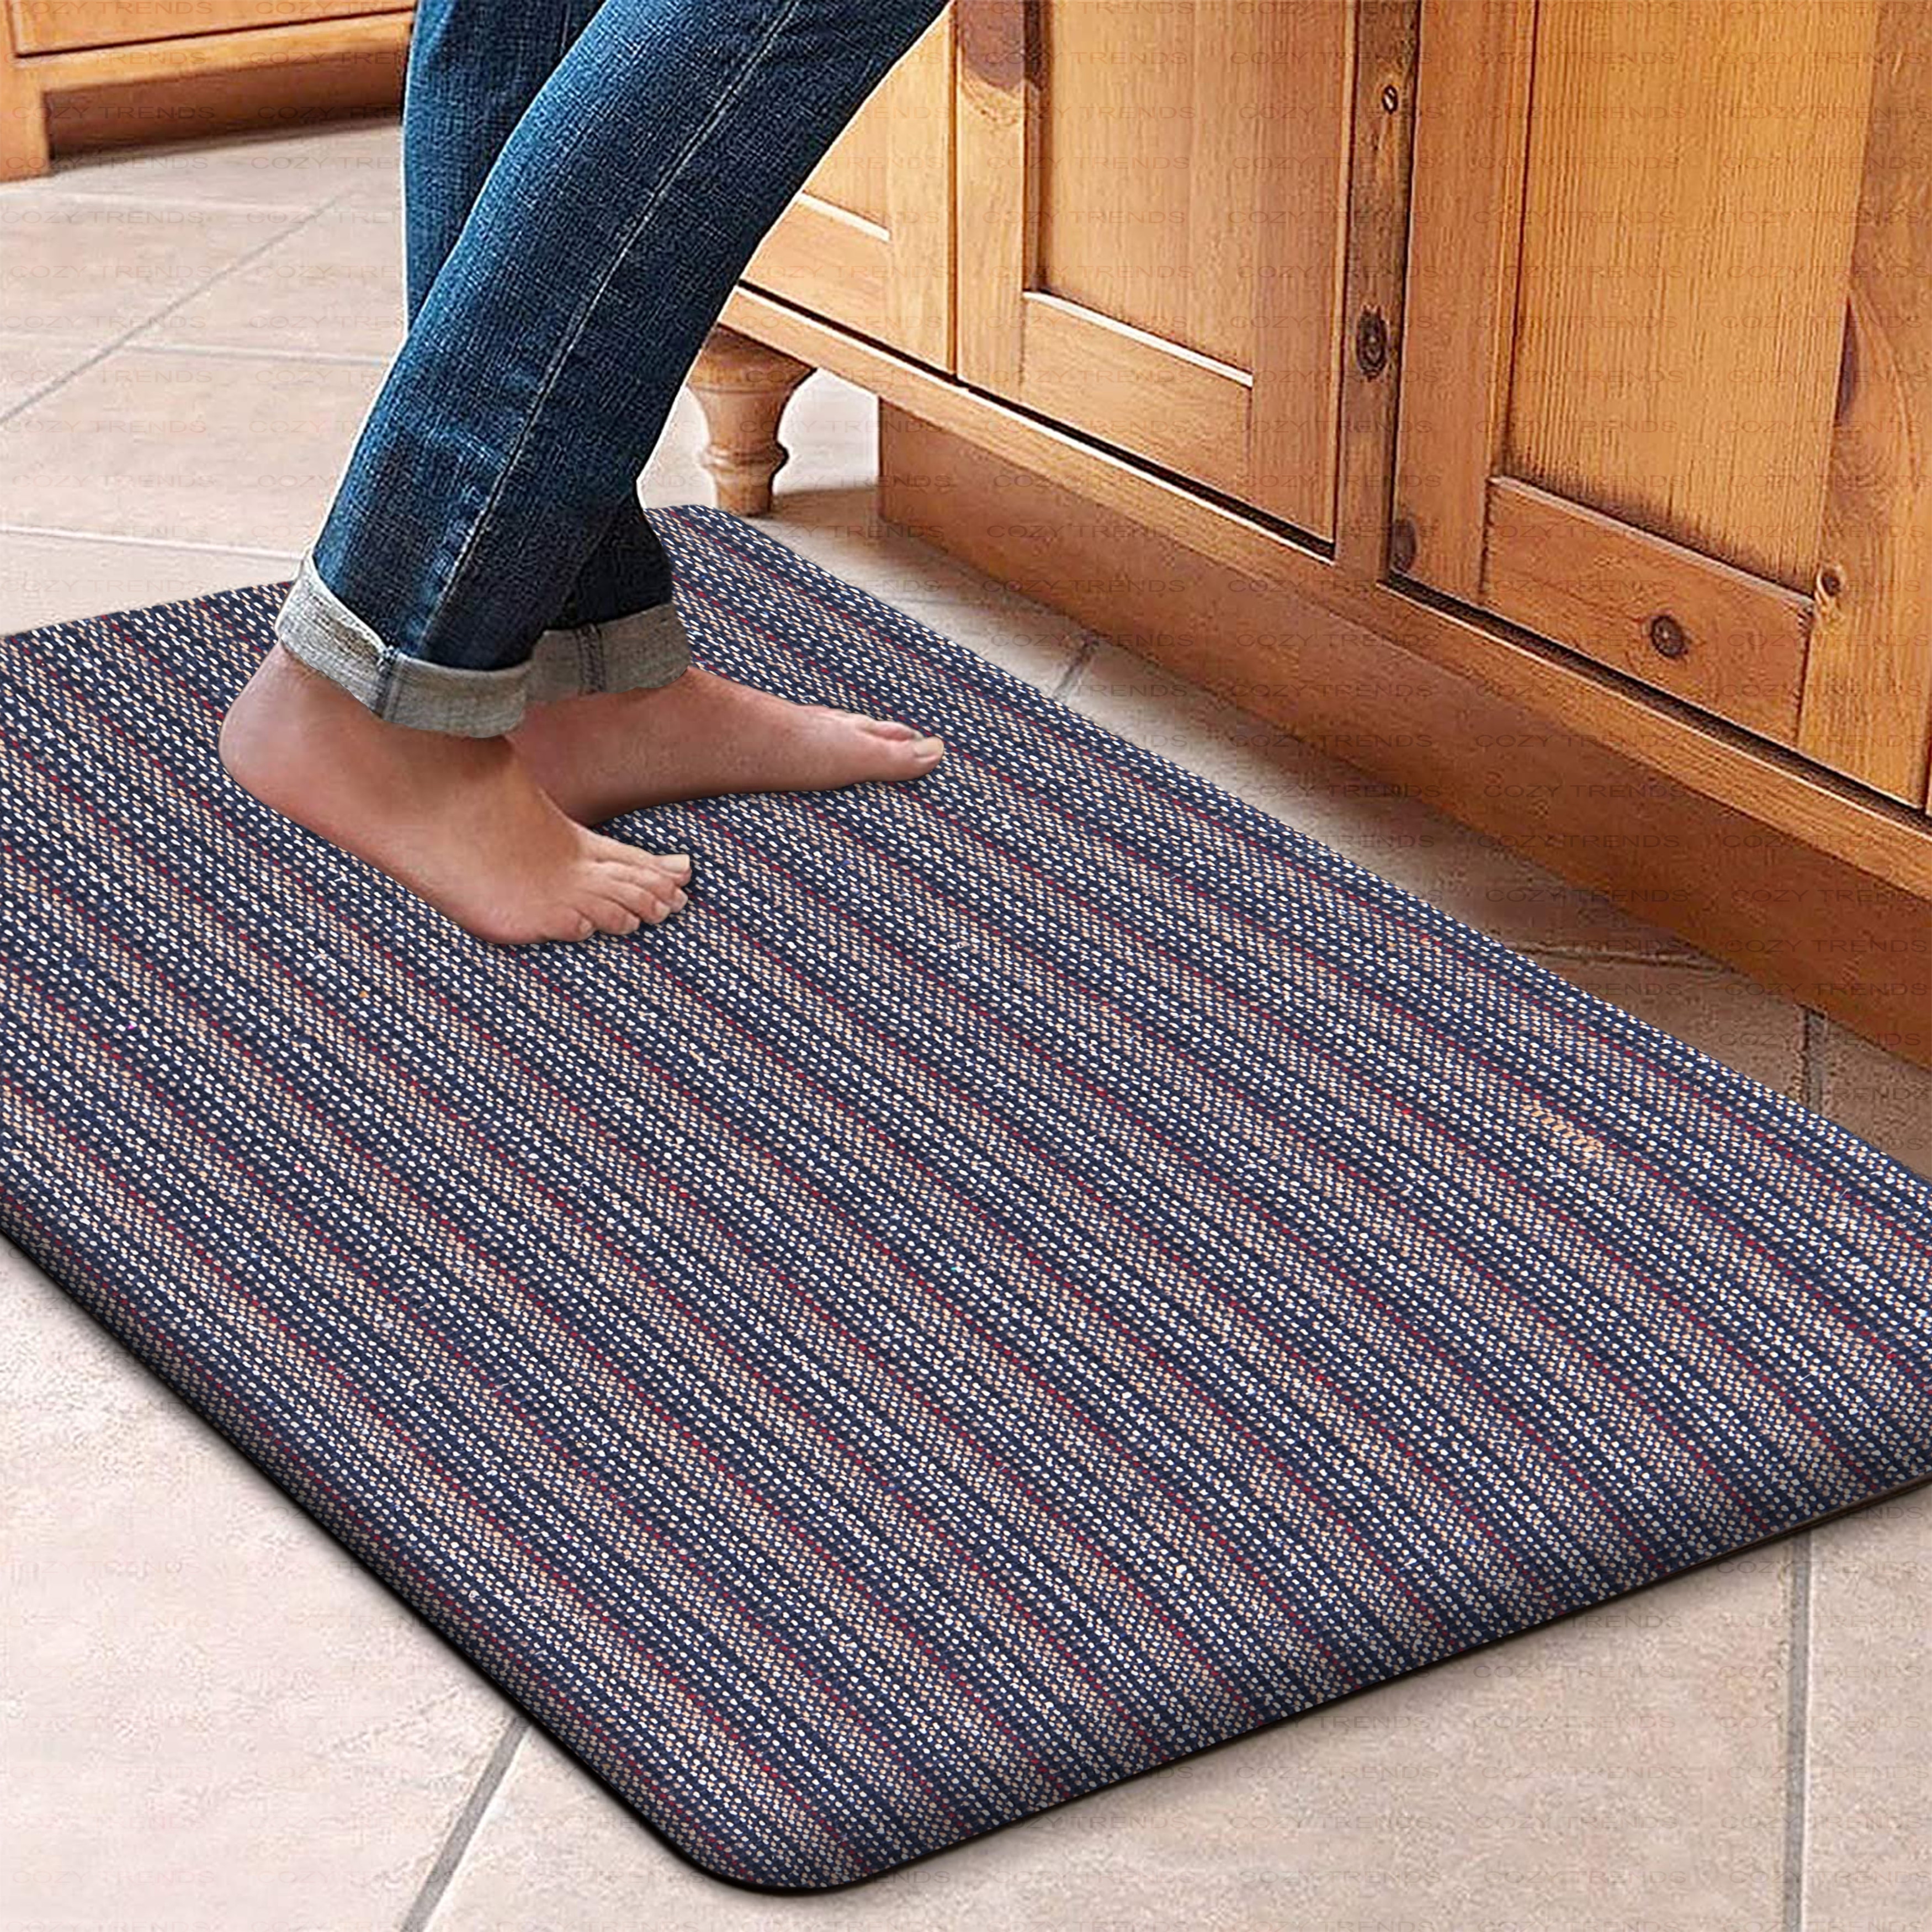 2x Doormats Non-Slip Bathroom Kitchen Door Mats Carton Decorative Rug Carpet US 